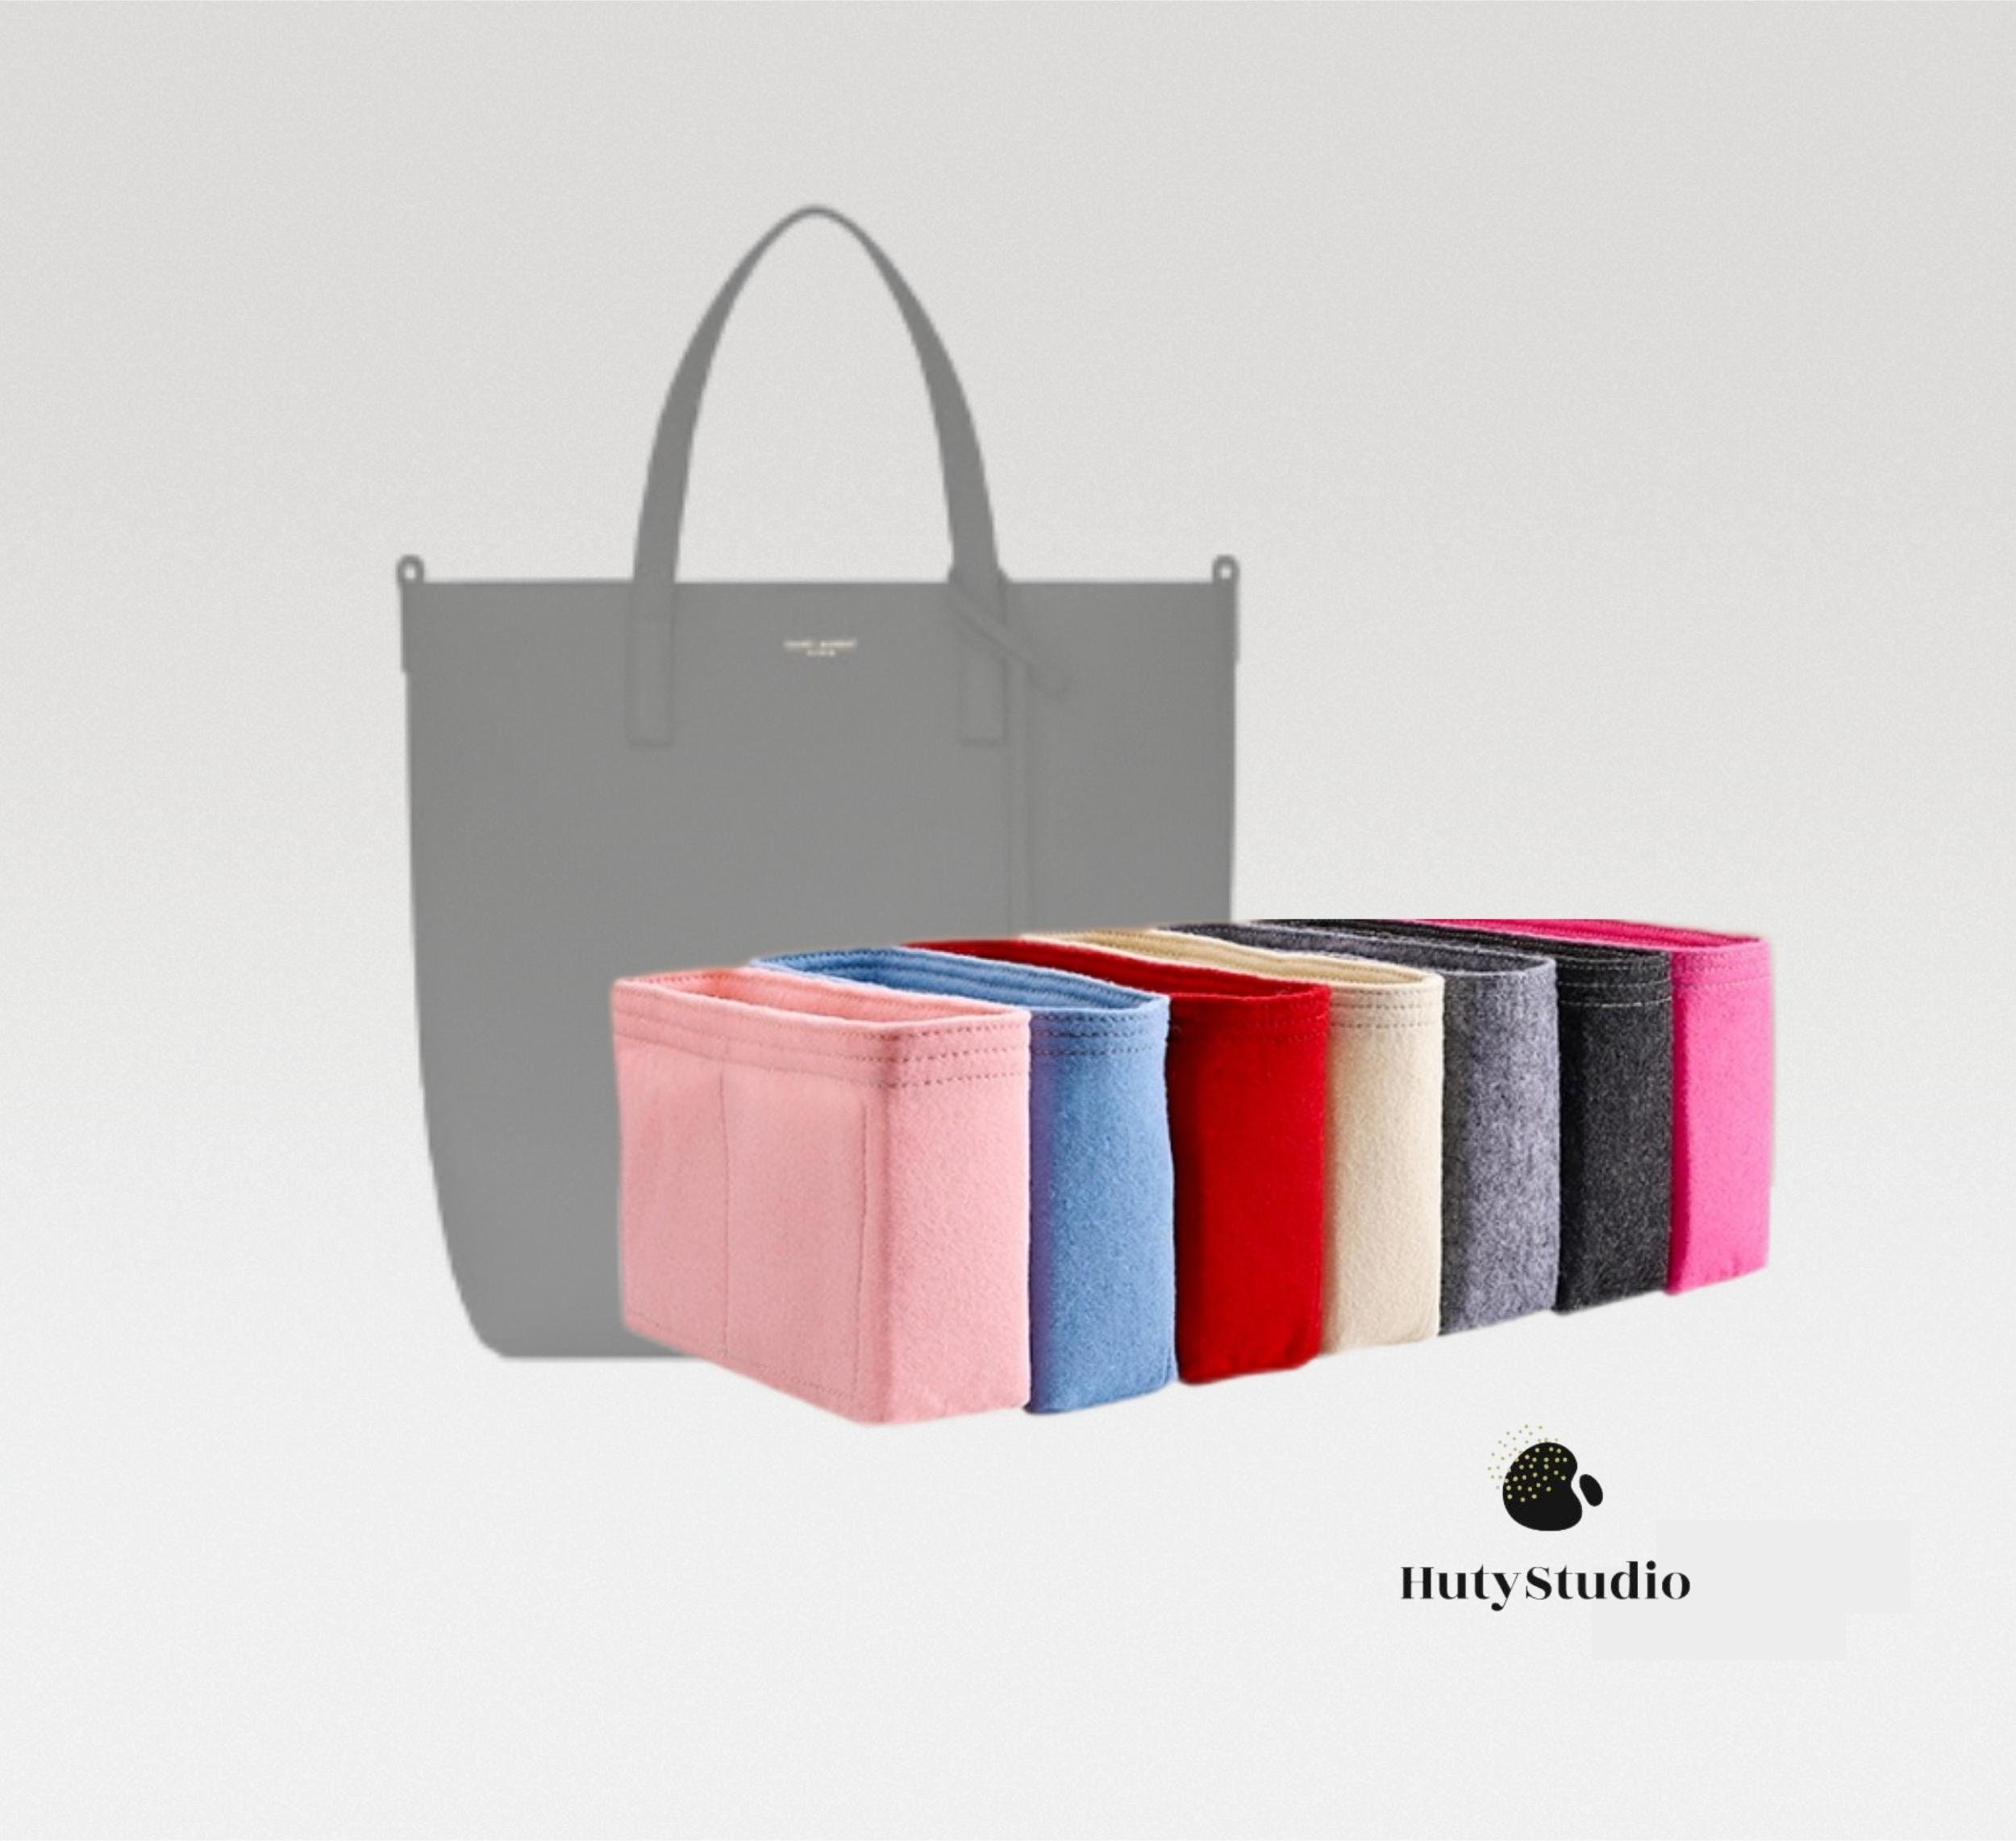 9-47/ SL-Toy-Shopping) Bag Organizer for SL Toy Shopping Tote - SAMORGA®  Perfect Bag Organizer